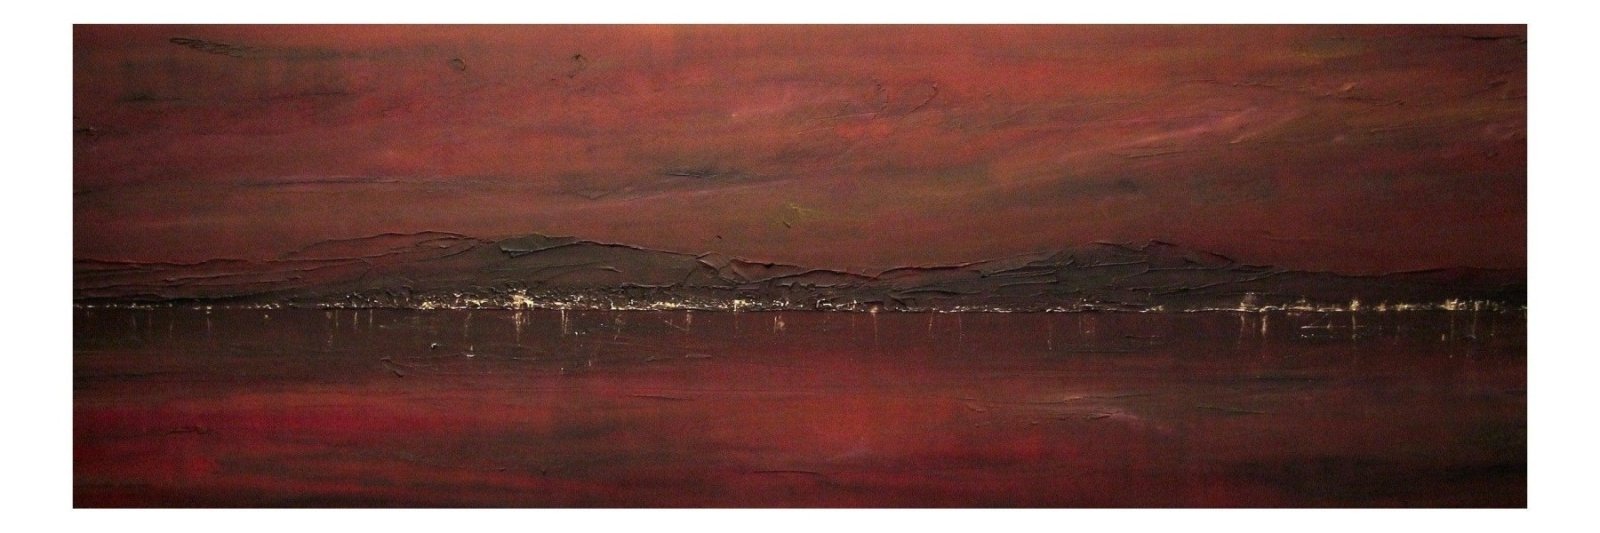 Belfast Lough Dusk | World Paintings Art Prints-Panoramic Prints-World Art Gallery-Paintings, Prints, Homeware, Art Gifts From Scotland By Scottish Artist Kevin Hunter